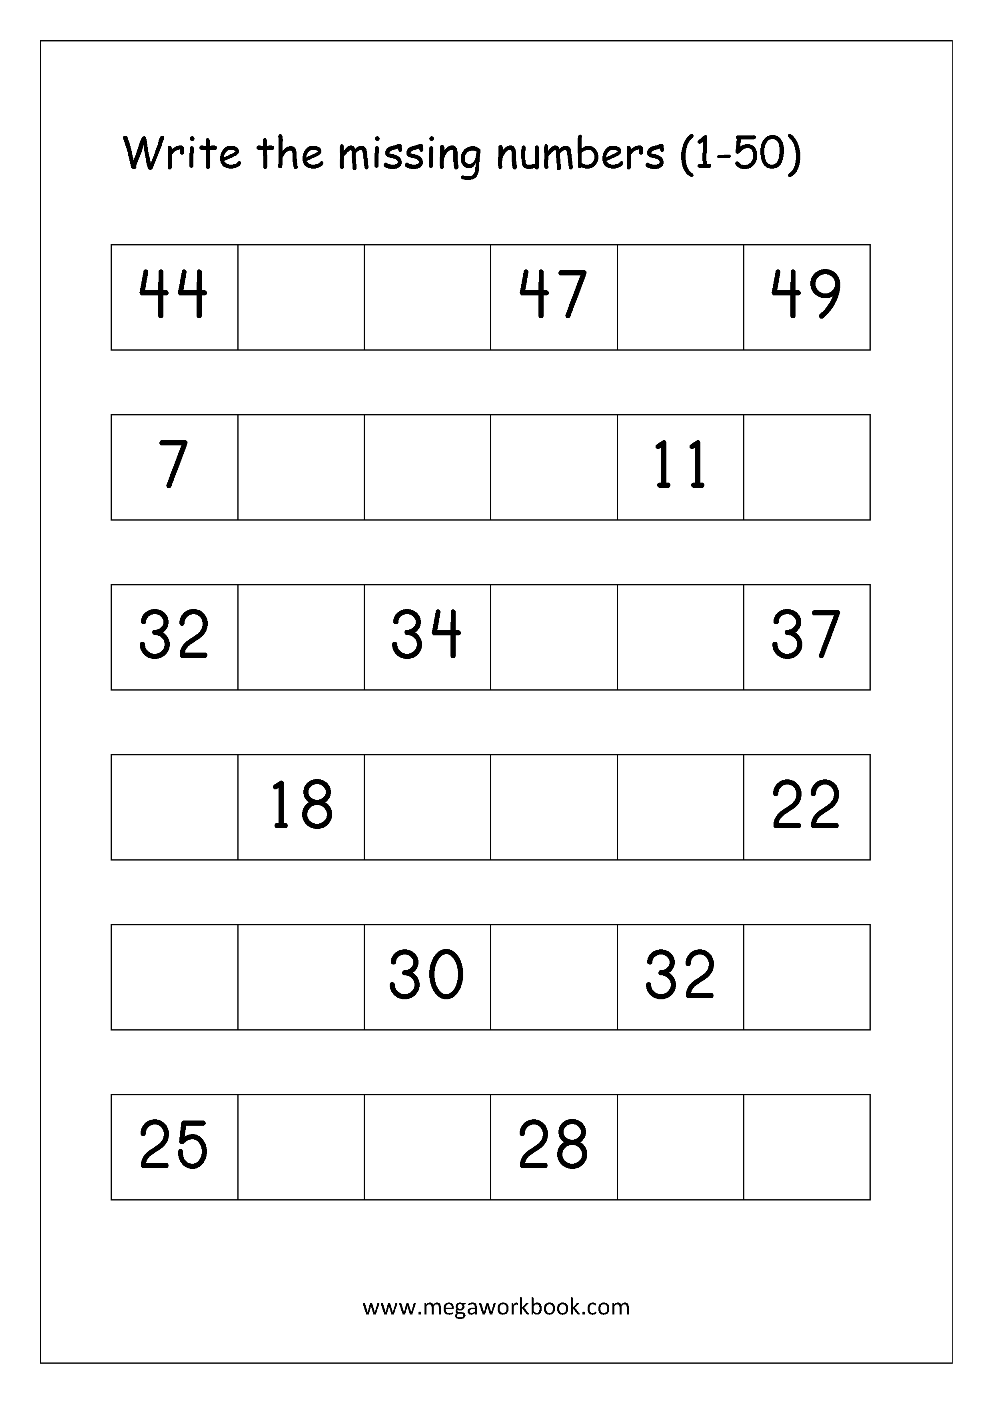 counting-numbers-1-50-worksheets-worksheets-for-kindergarten